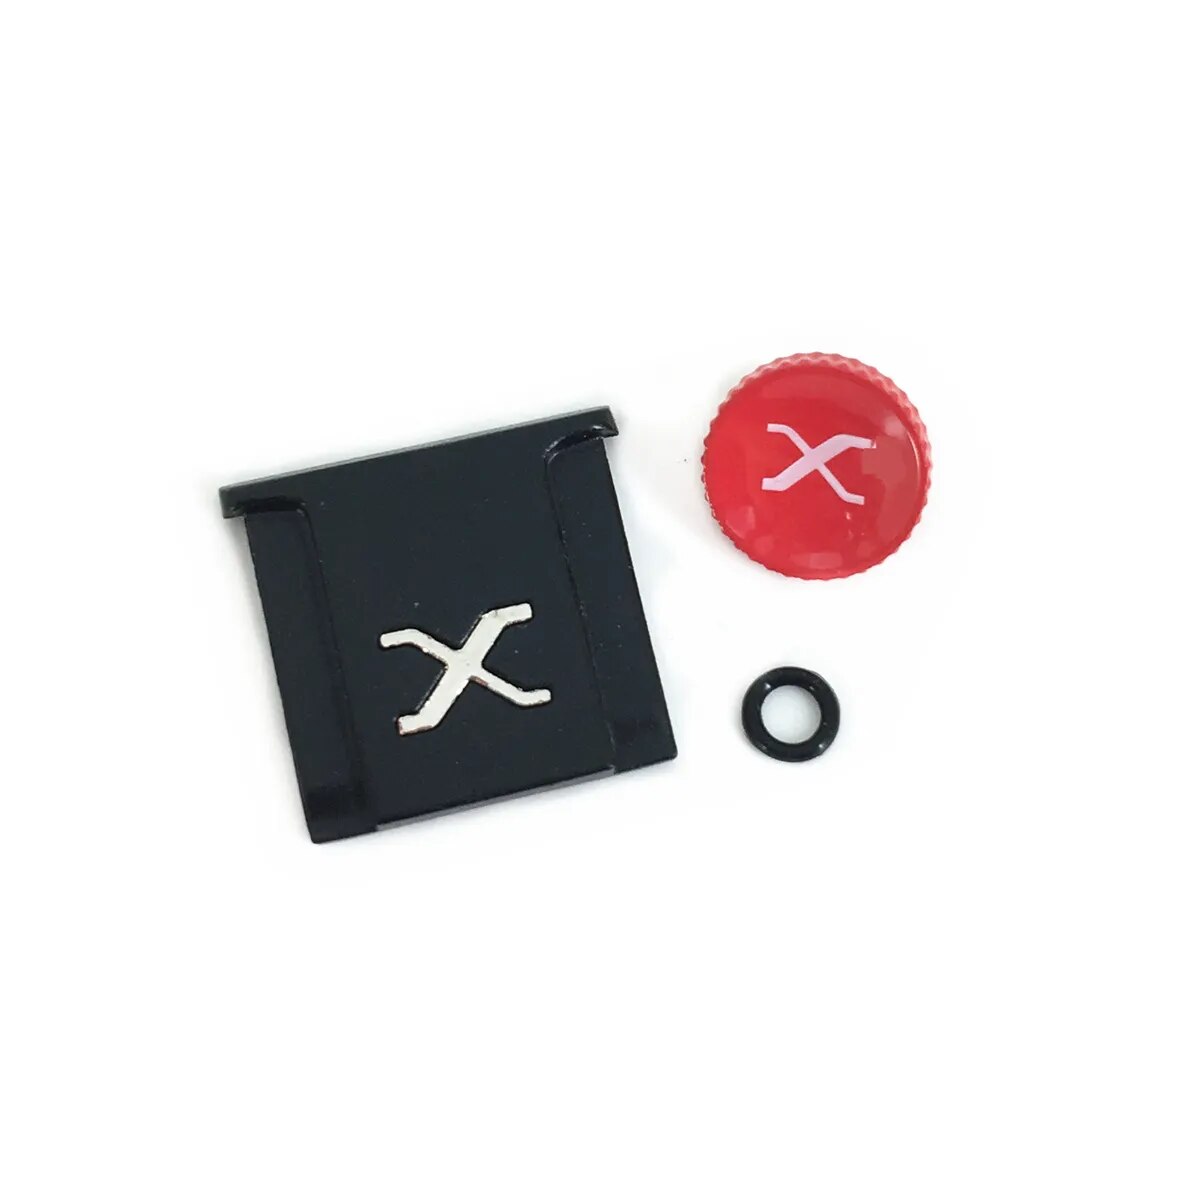 Metal Hot Shoe Adapter + Concave Shutter Button Kit for Fujiflm Fuji X-PRO3 X-PRO2 XT4 XT3 XT2 X-T30 XT20 X-E3 X-A5 X-A7 Hotshoe